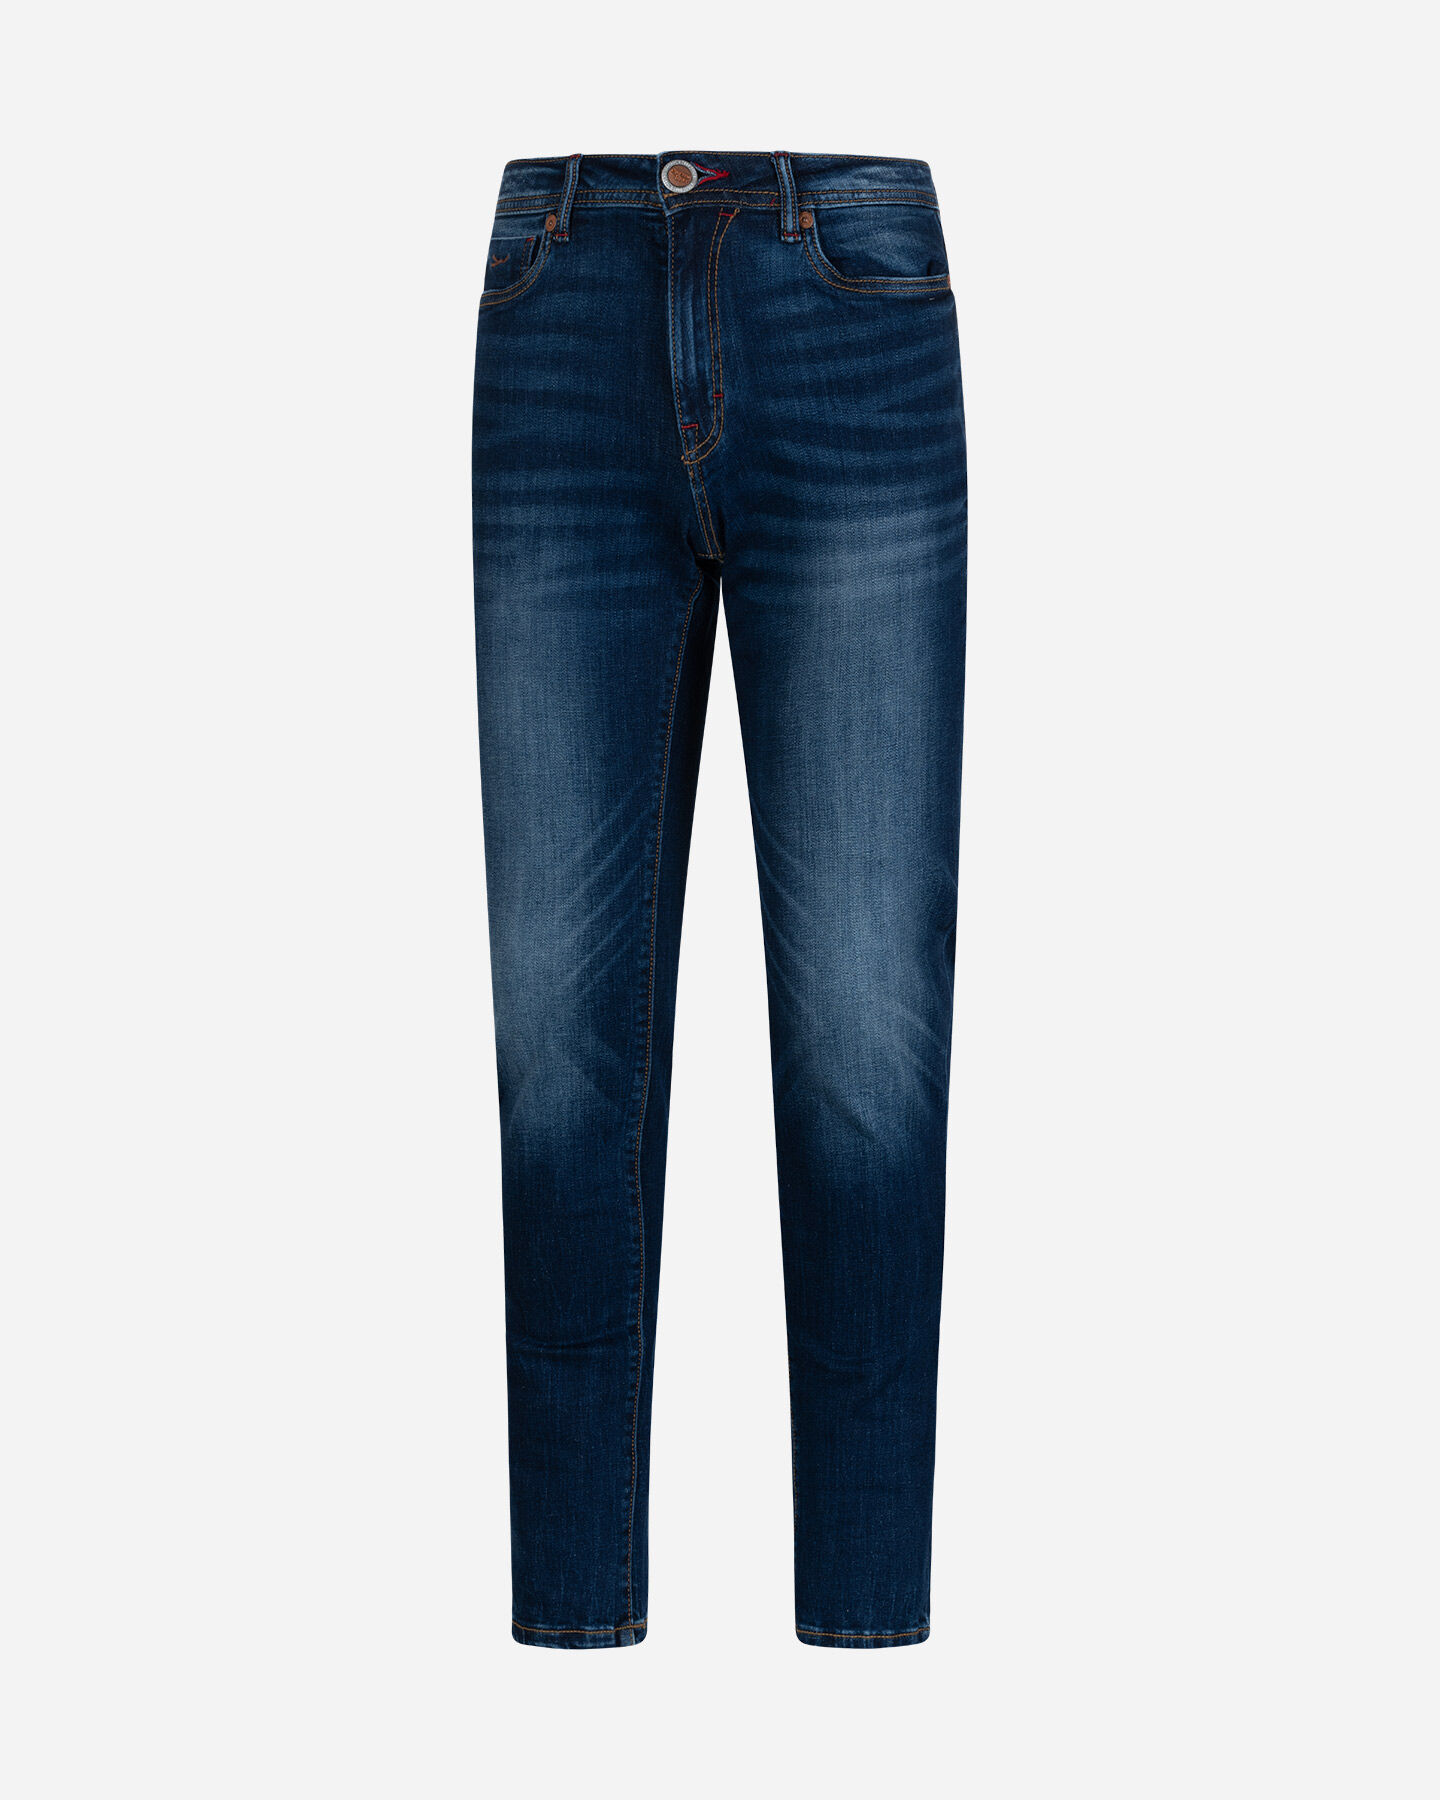  Jeans COTTON BELT 5 POCKET M S4126997|DD|40 scatto 4